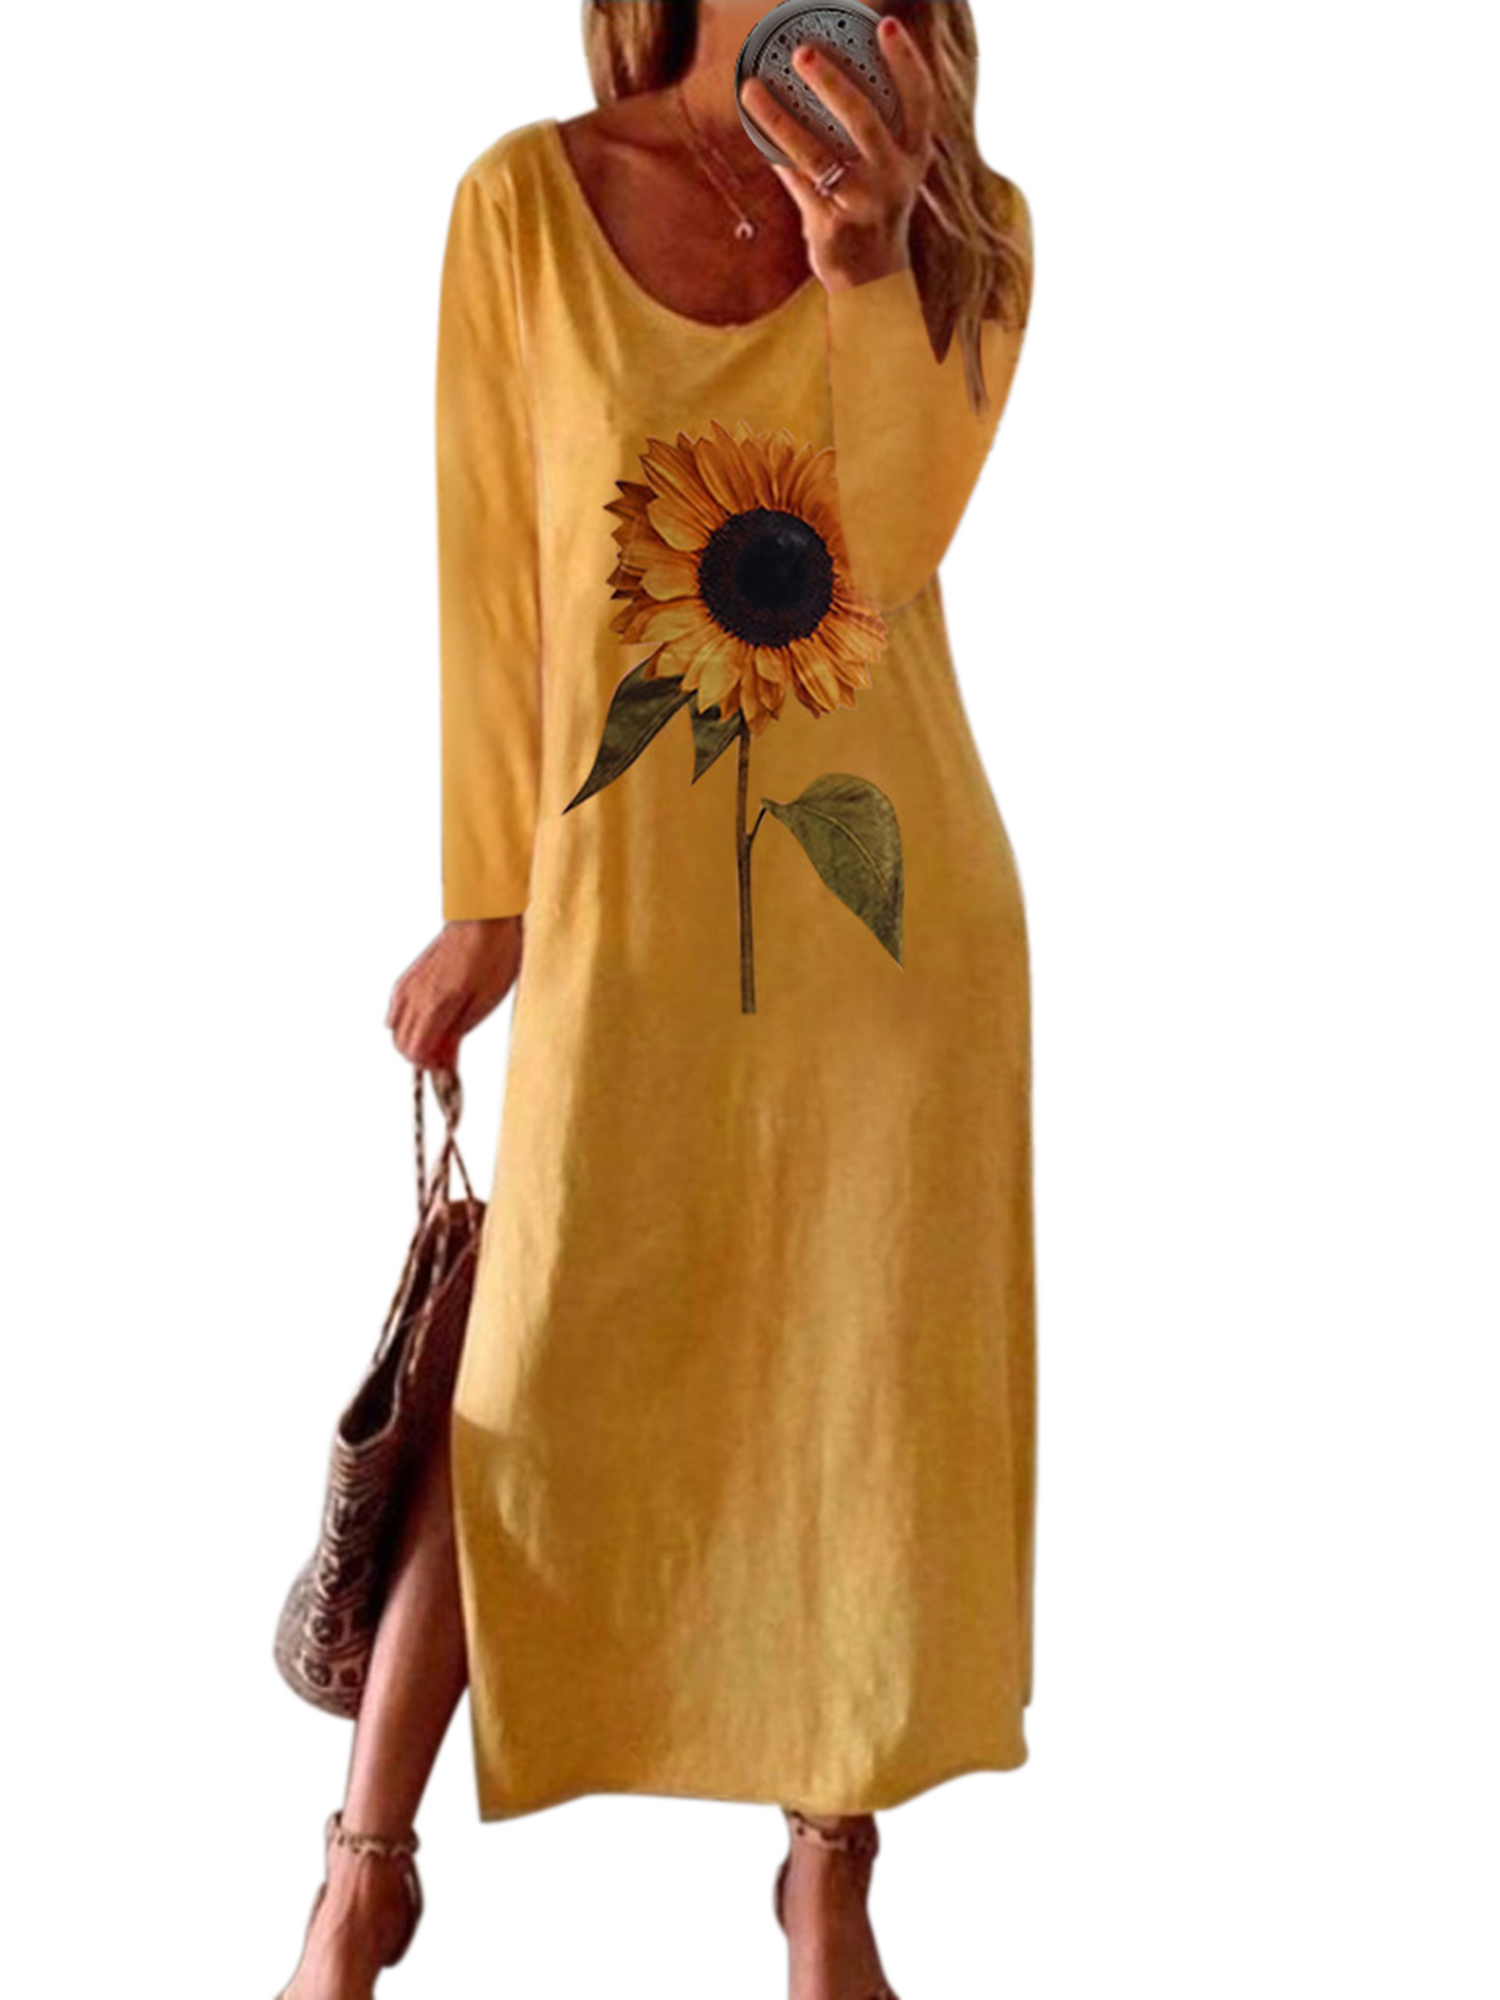 Women's Casual Sunflower Print Long Sleeves Ruffle Dress Print Boho Sundress - image 1 of 3